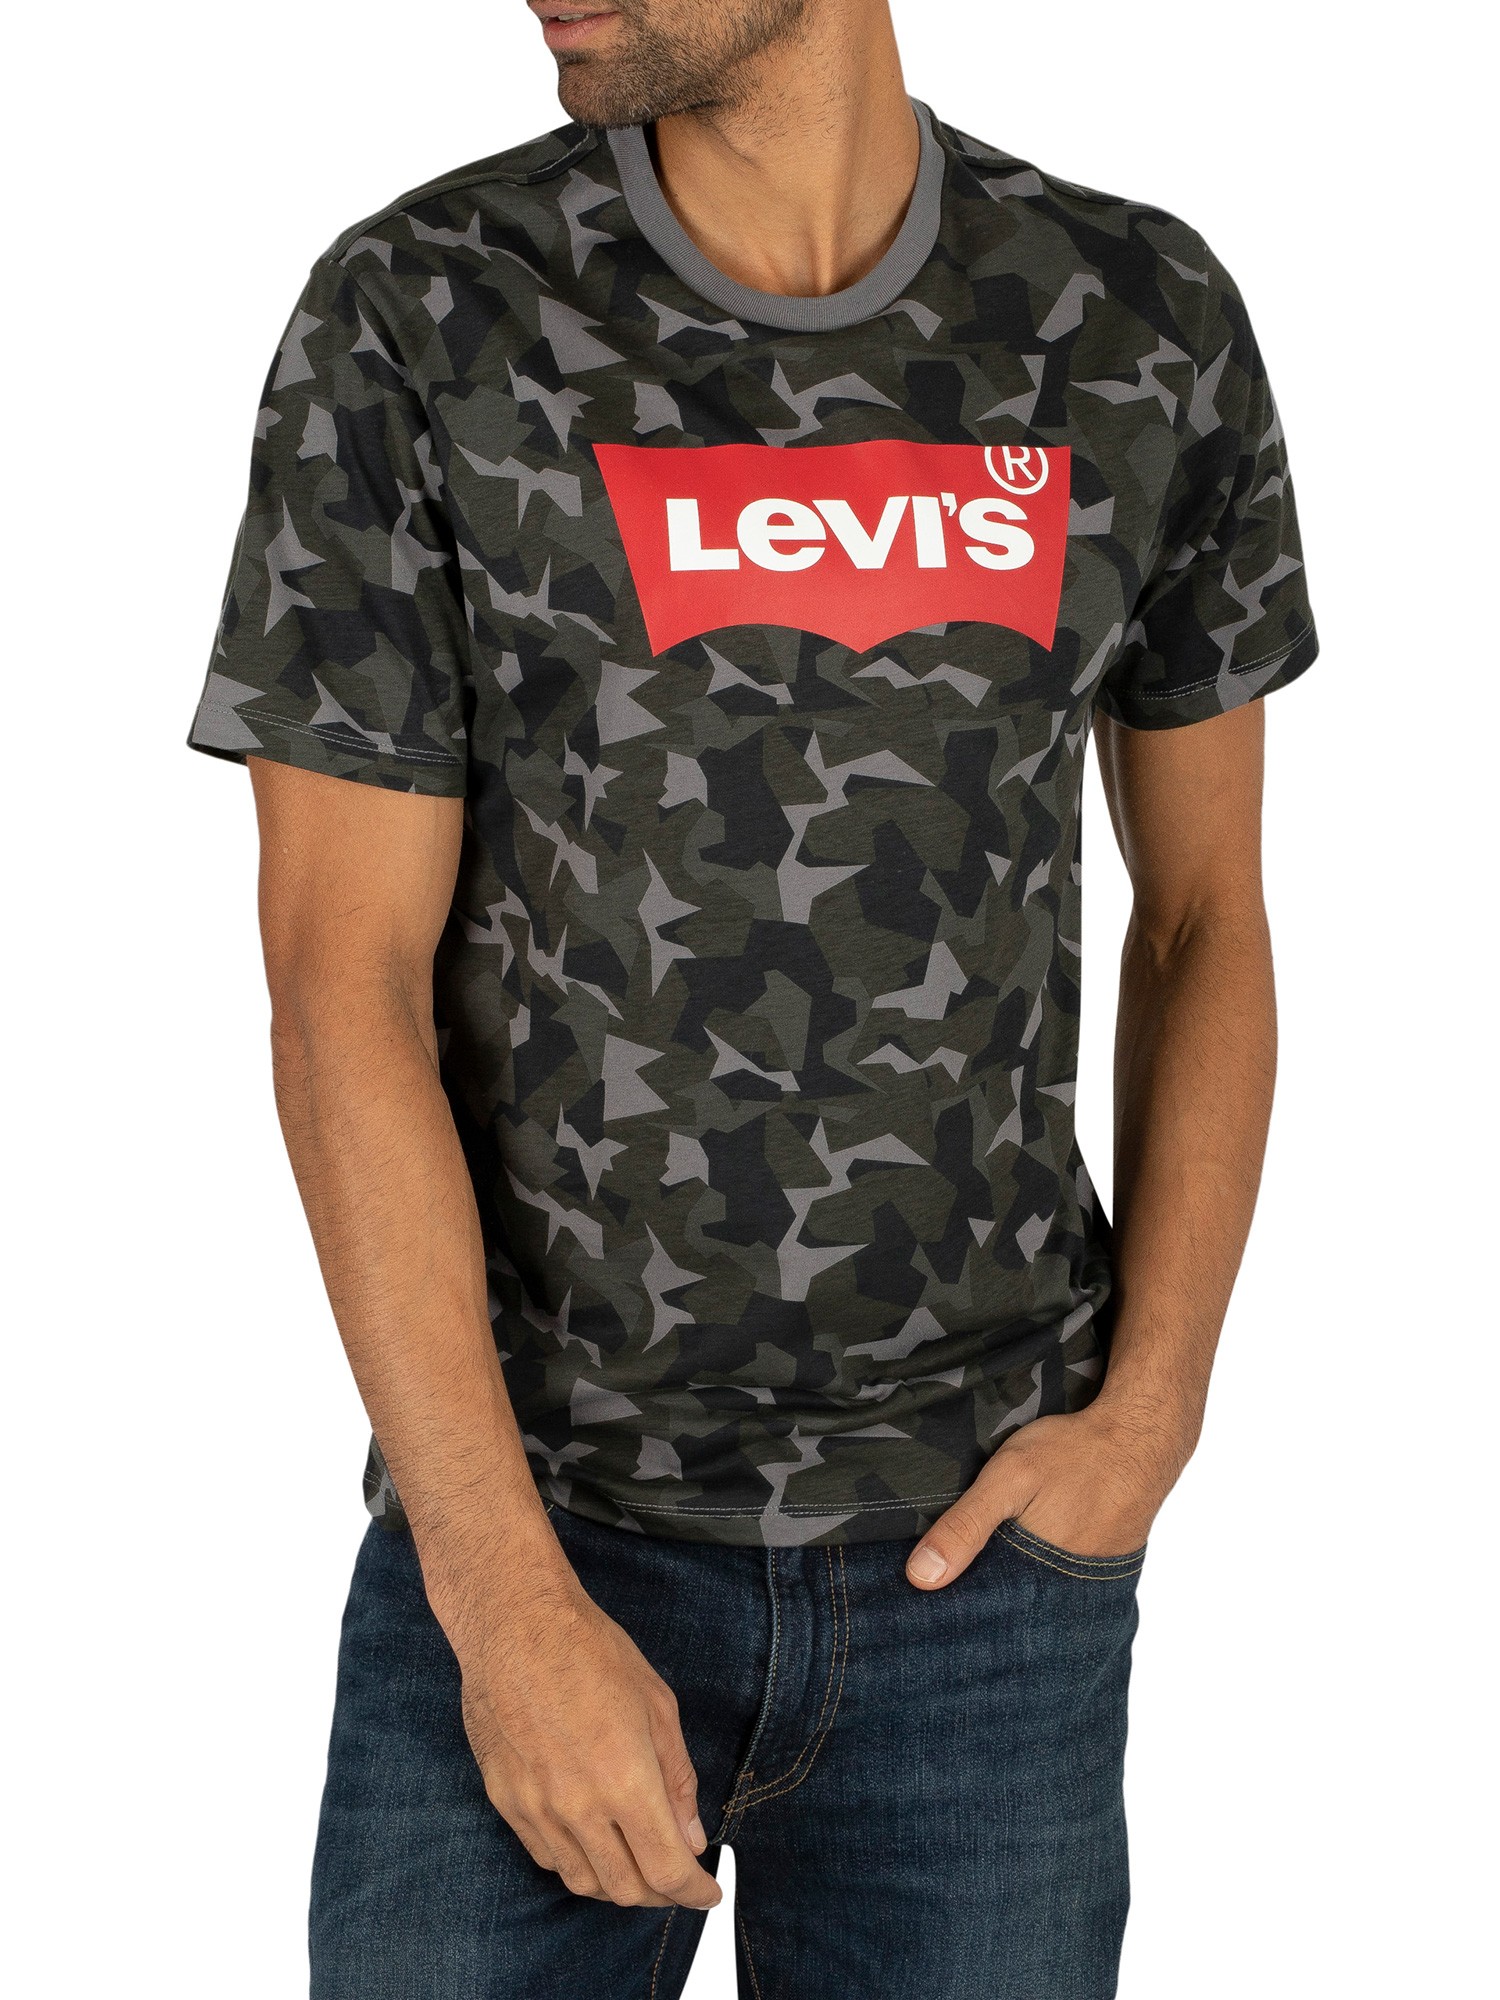 Levi's Housemark Graphic T-Shirt - Camo 